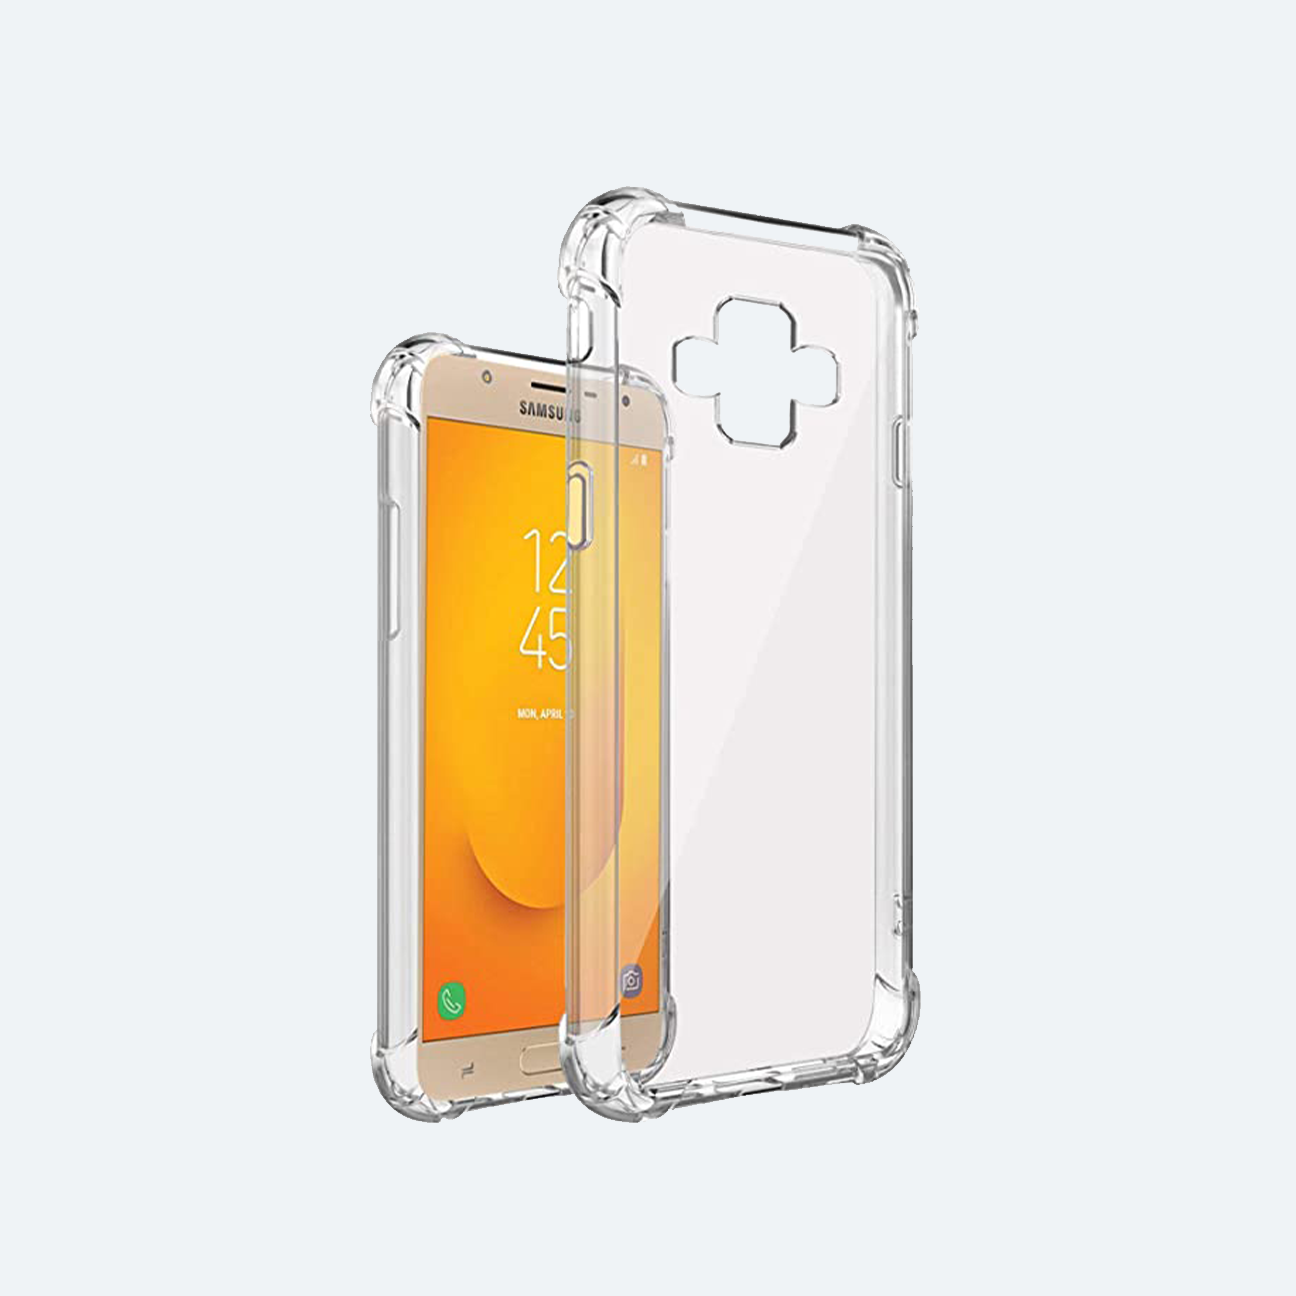 Samsung Galaxy J7 Duo Transparent Back Cover